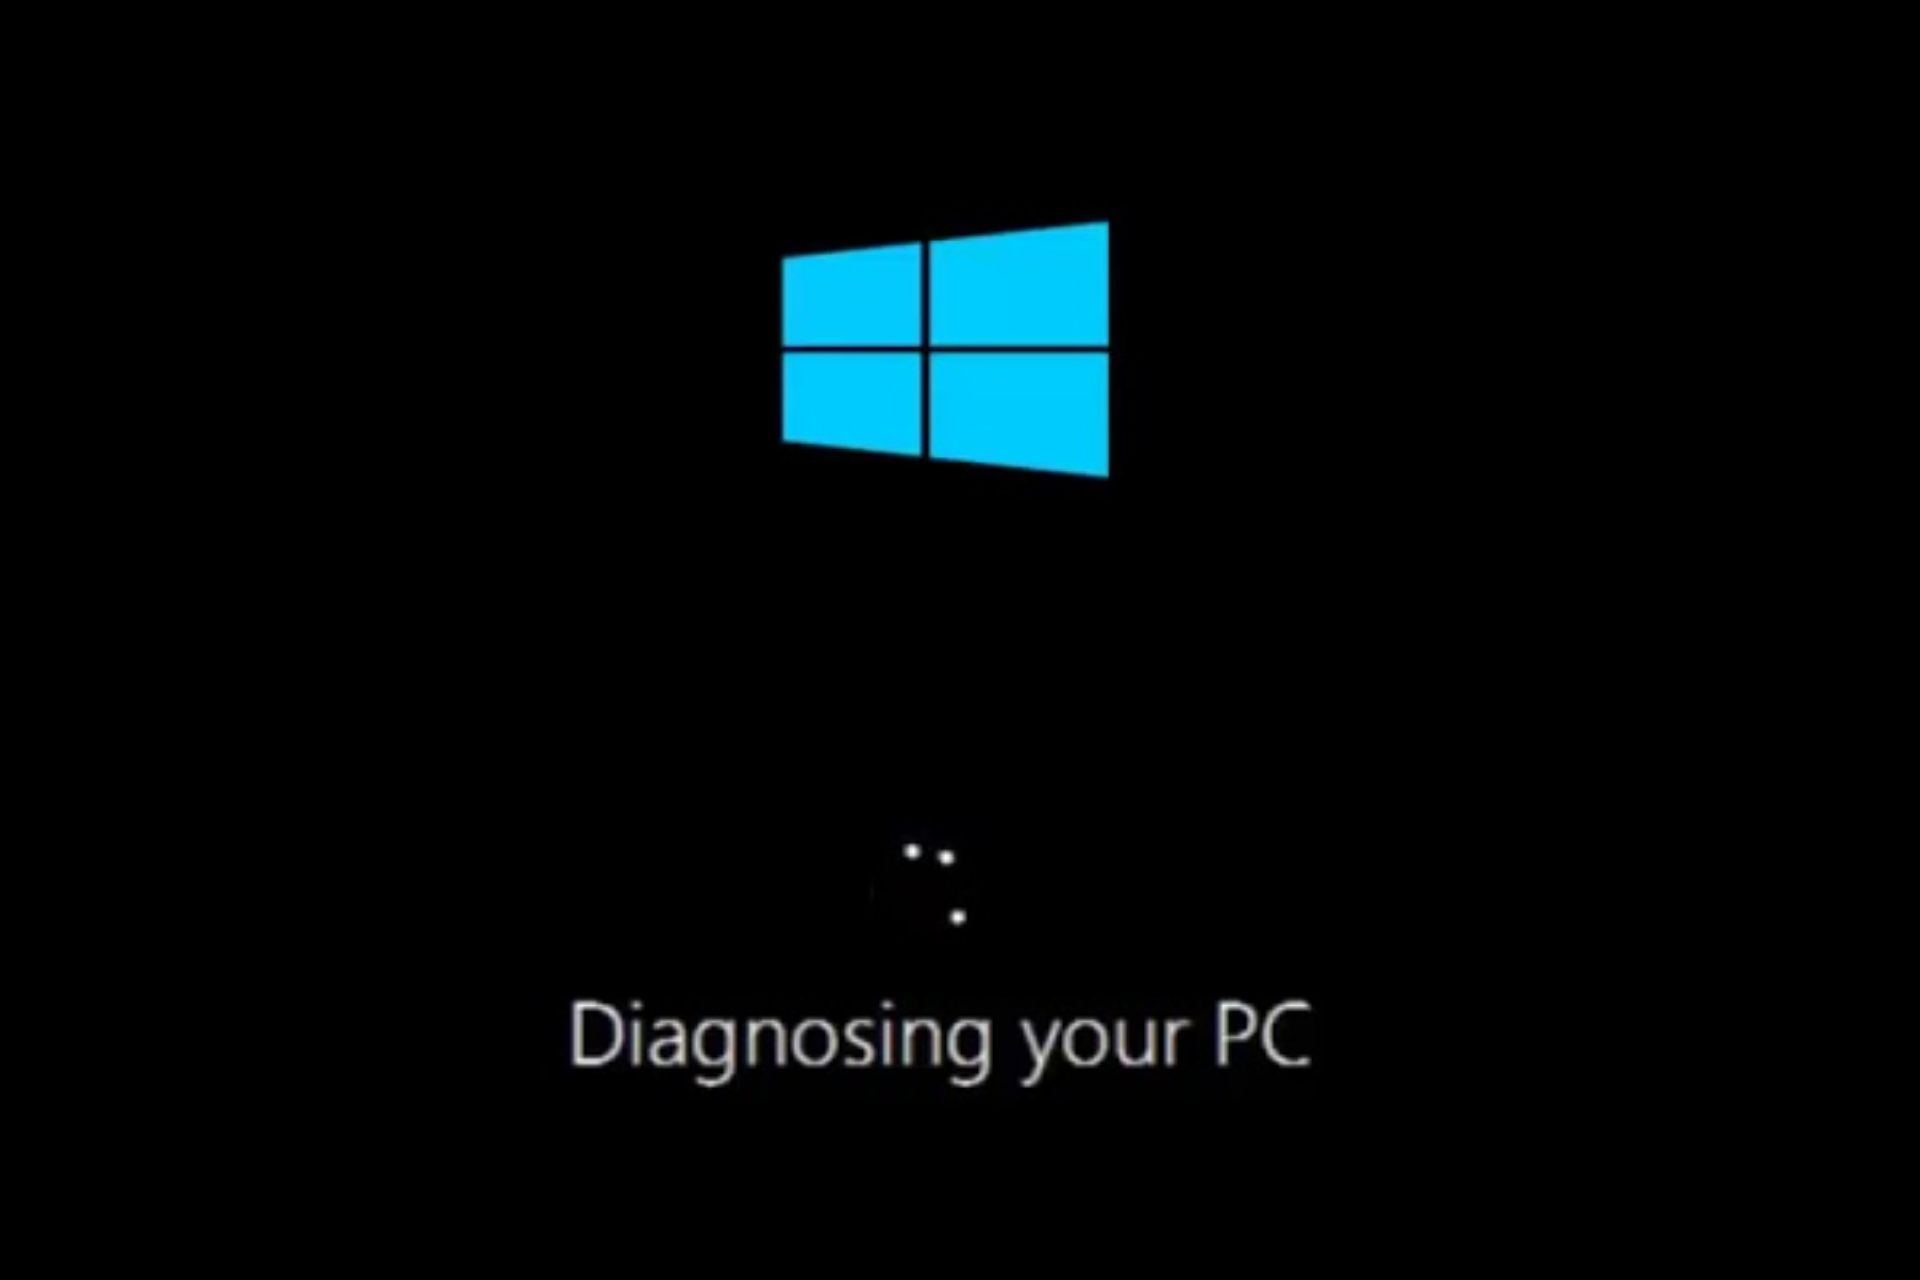 diagnosing your PC